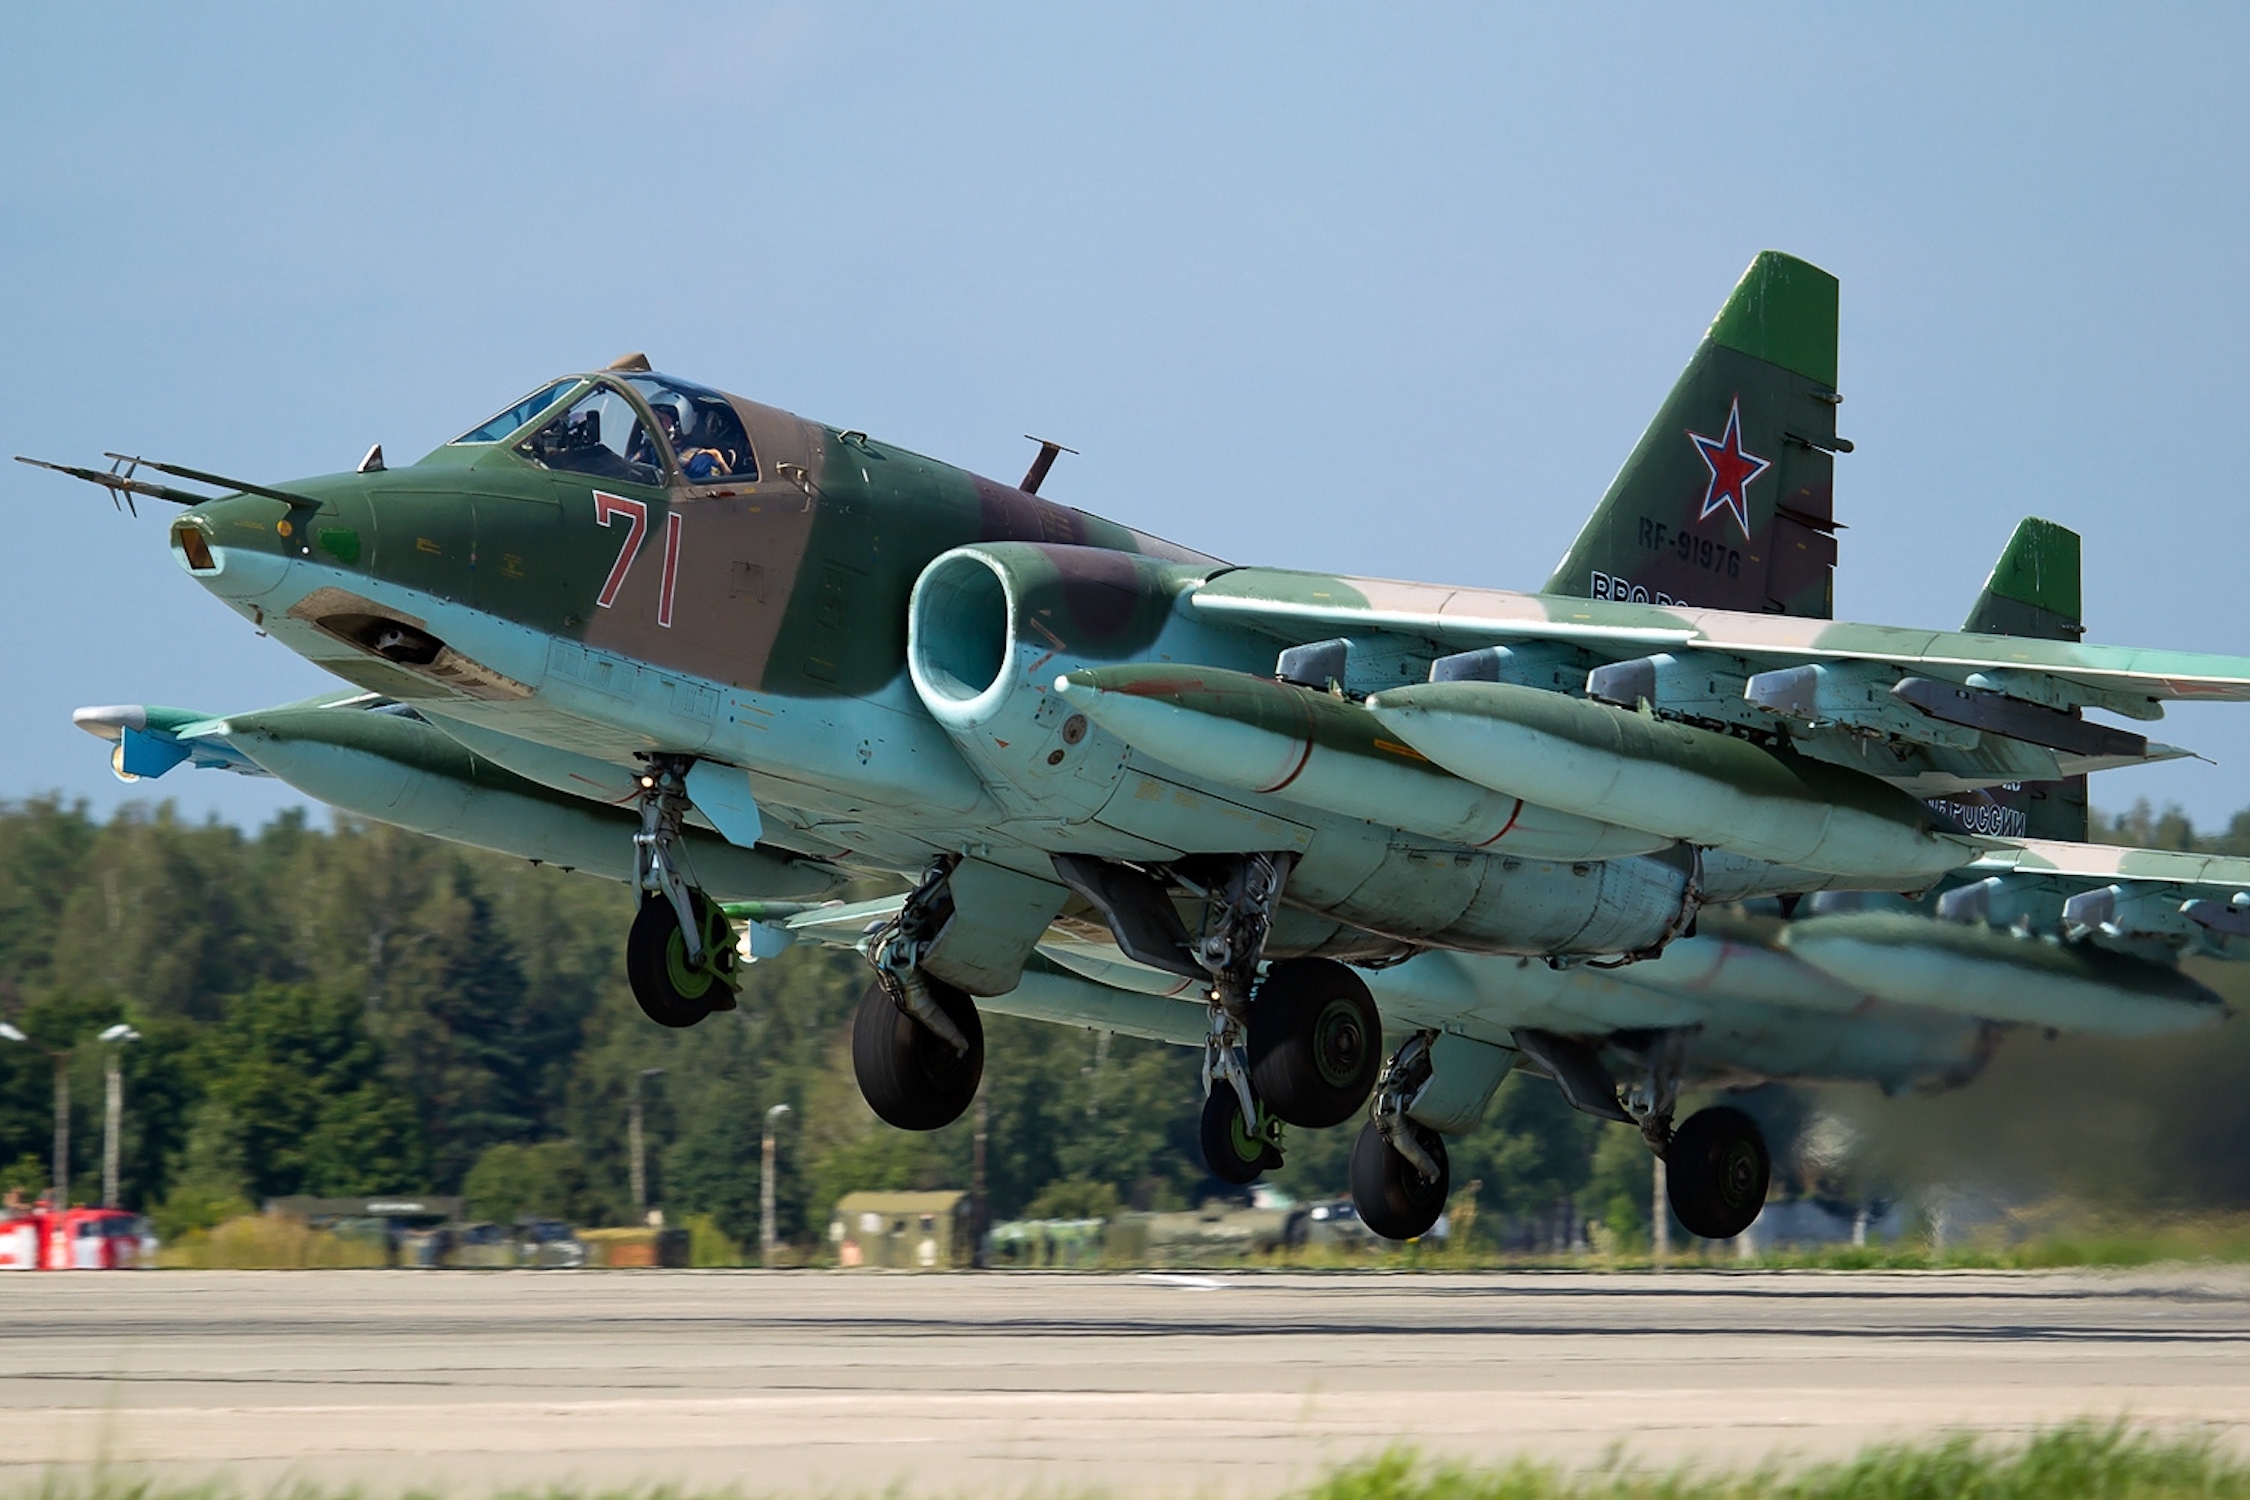 Russian Su-25 ground attack aircraft shot down in Idlib, Syria